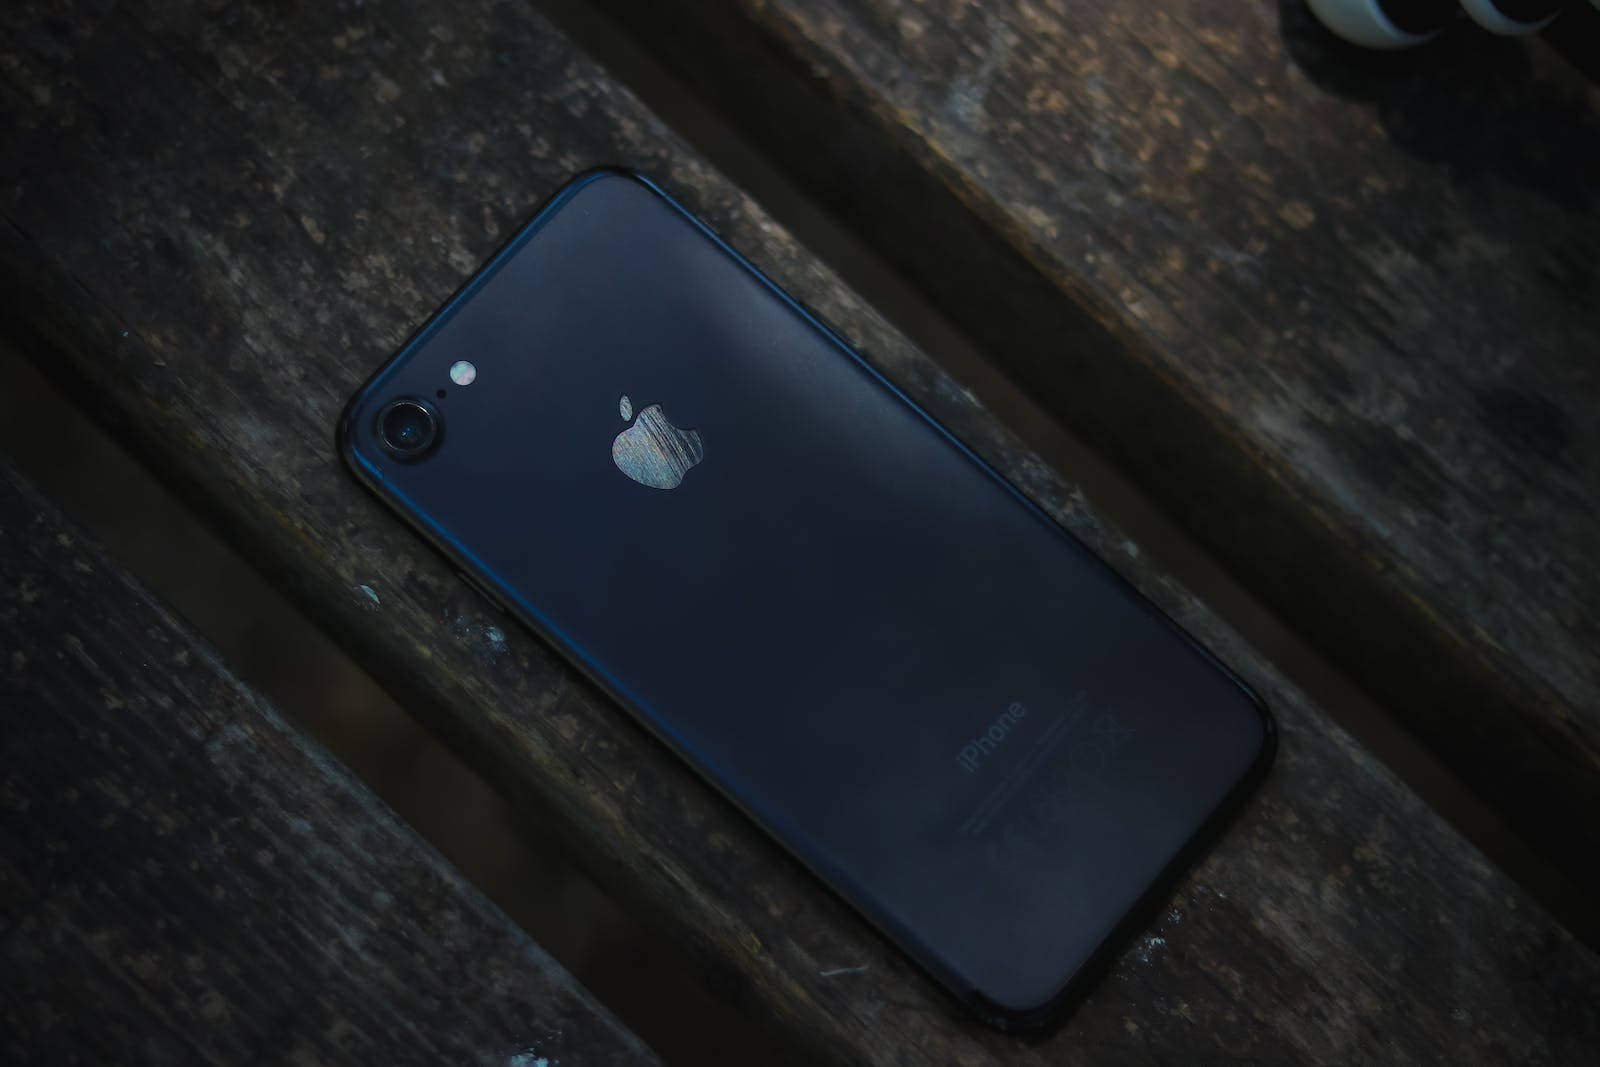 Dark Iphone 7 On Wood Background